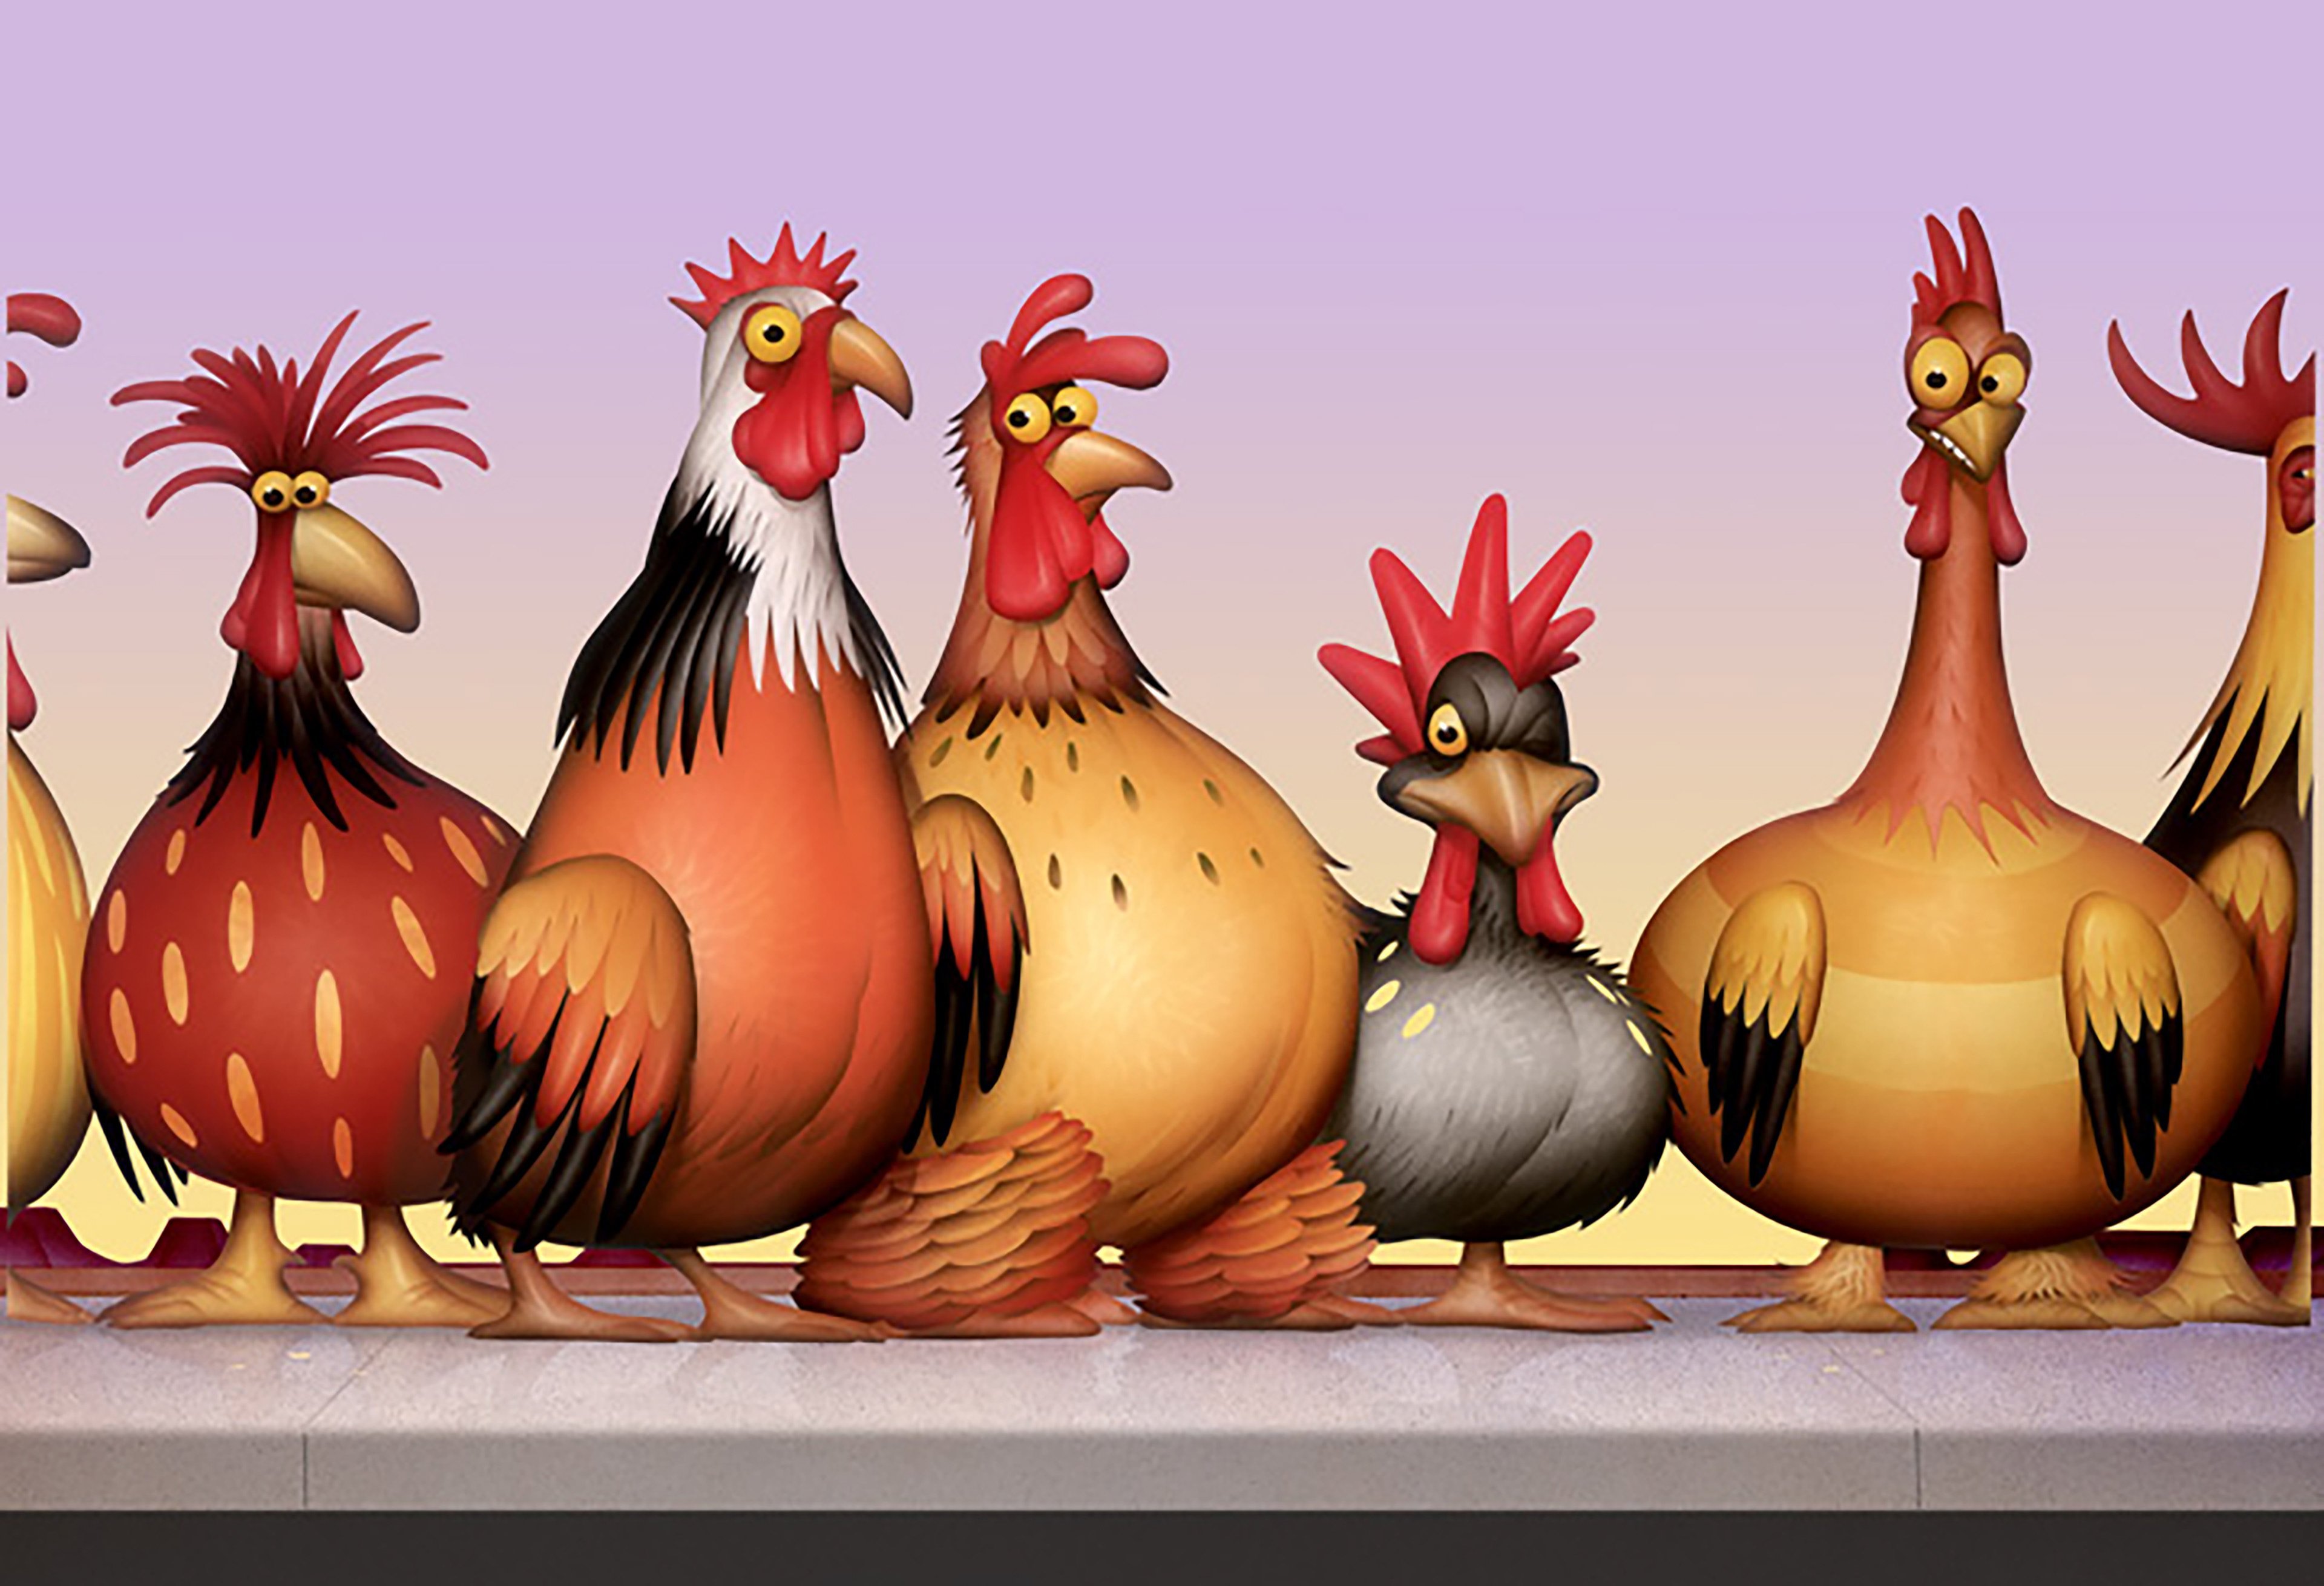 Кура 5 6. Веселые курочки. Курица смешная картинка. Пять куриц. Курица арт.